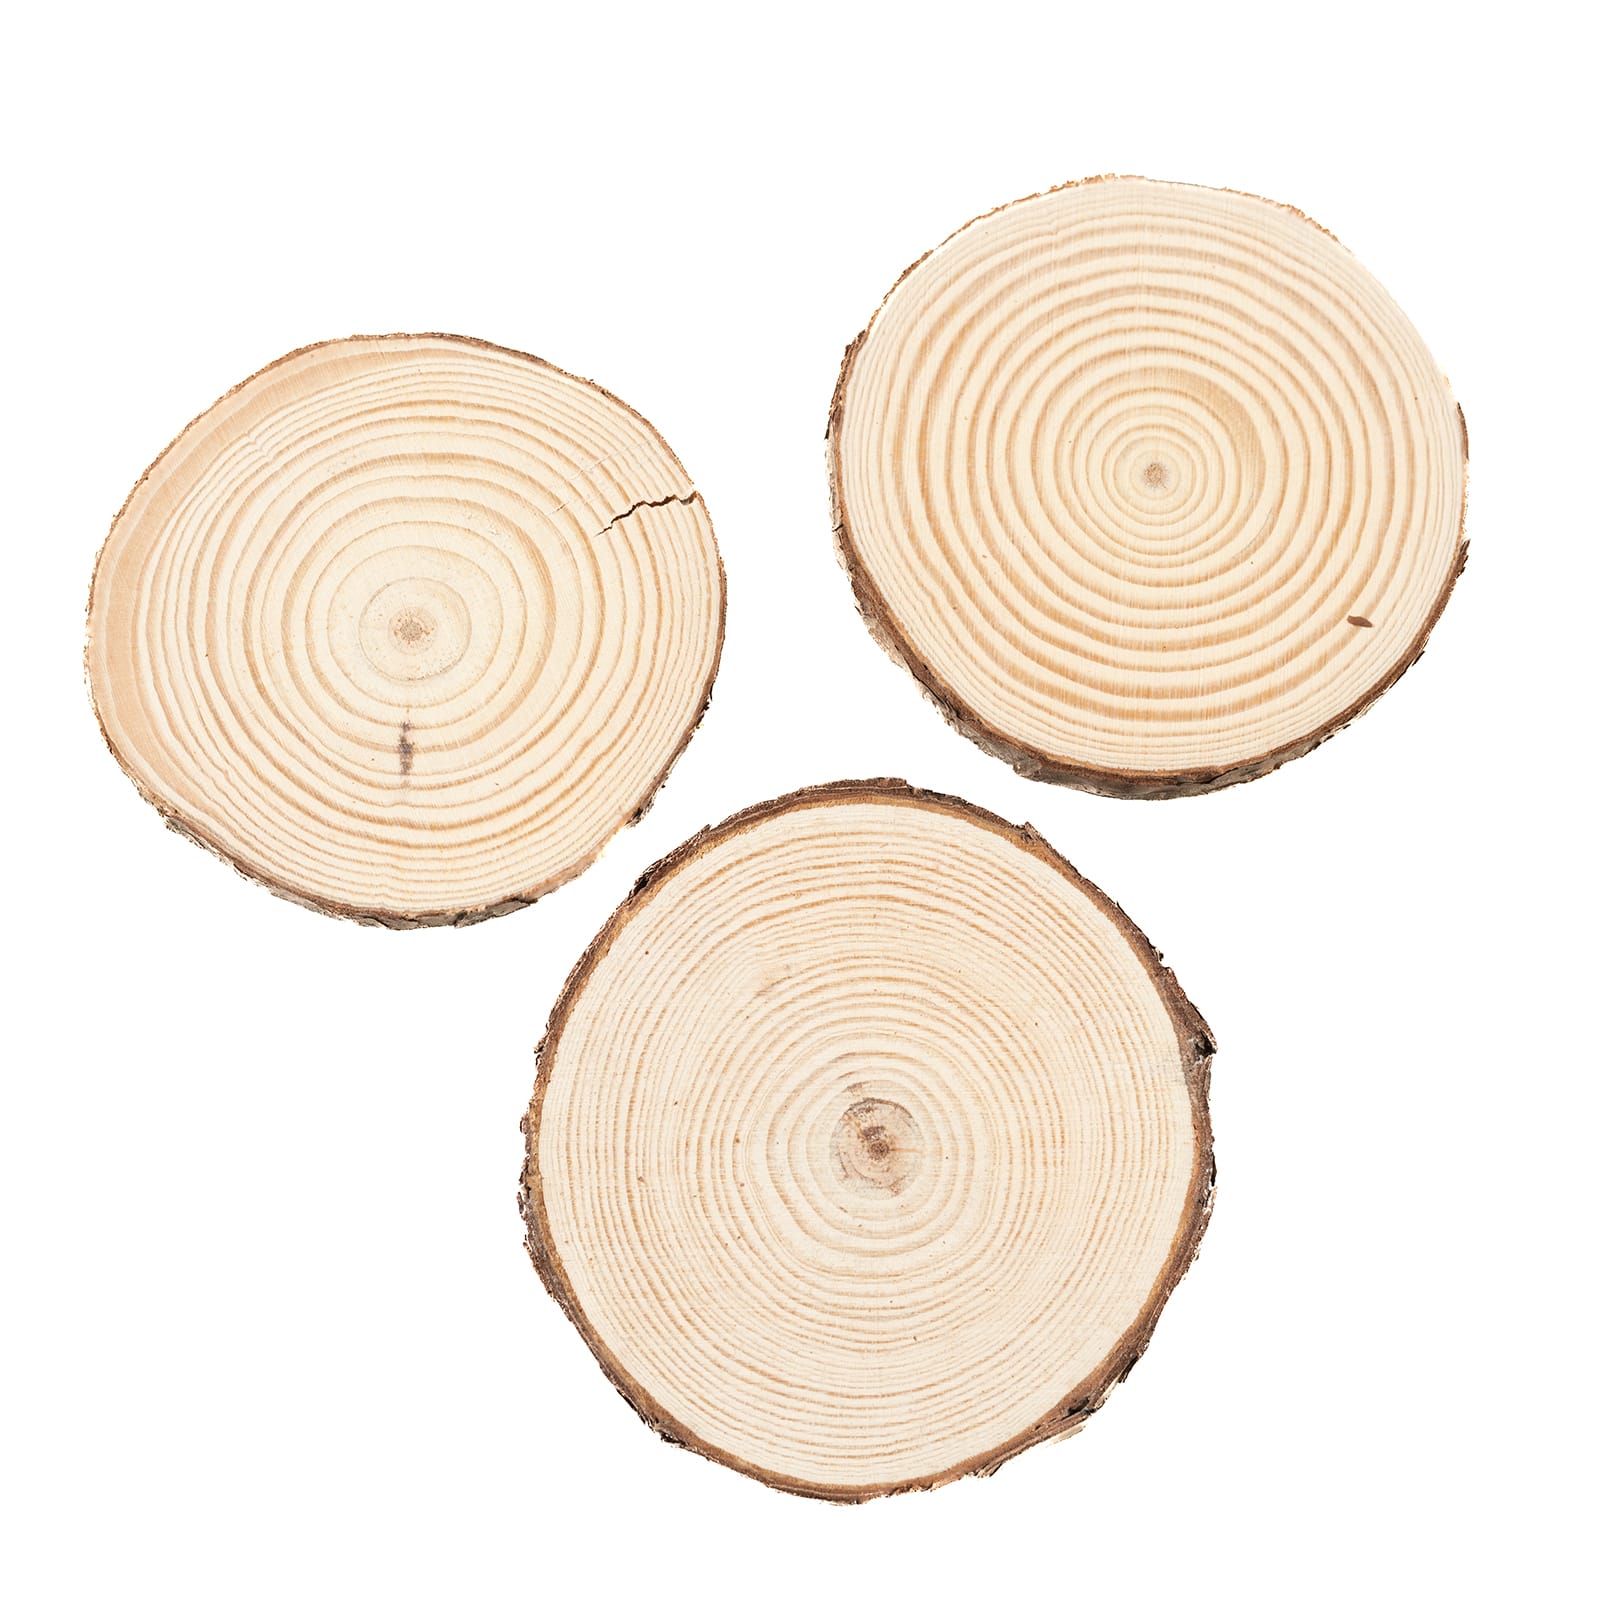 Lemonfilter Natural Wood Slices 8 Pcs 6.3-6.7 Inches Craft Wood